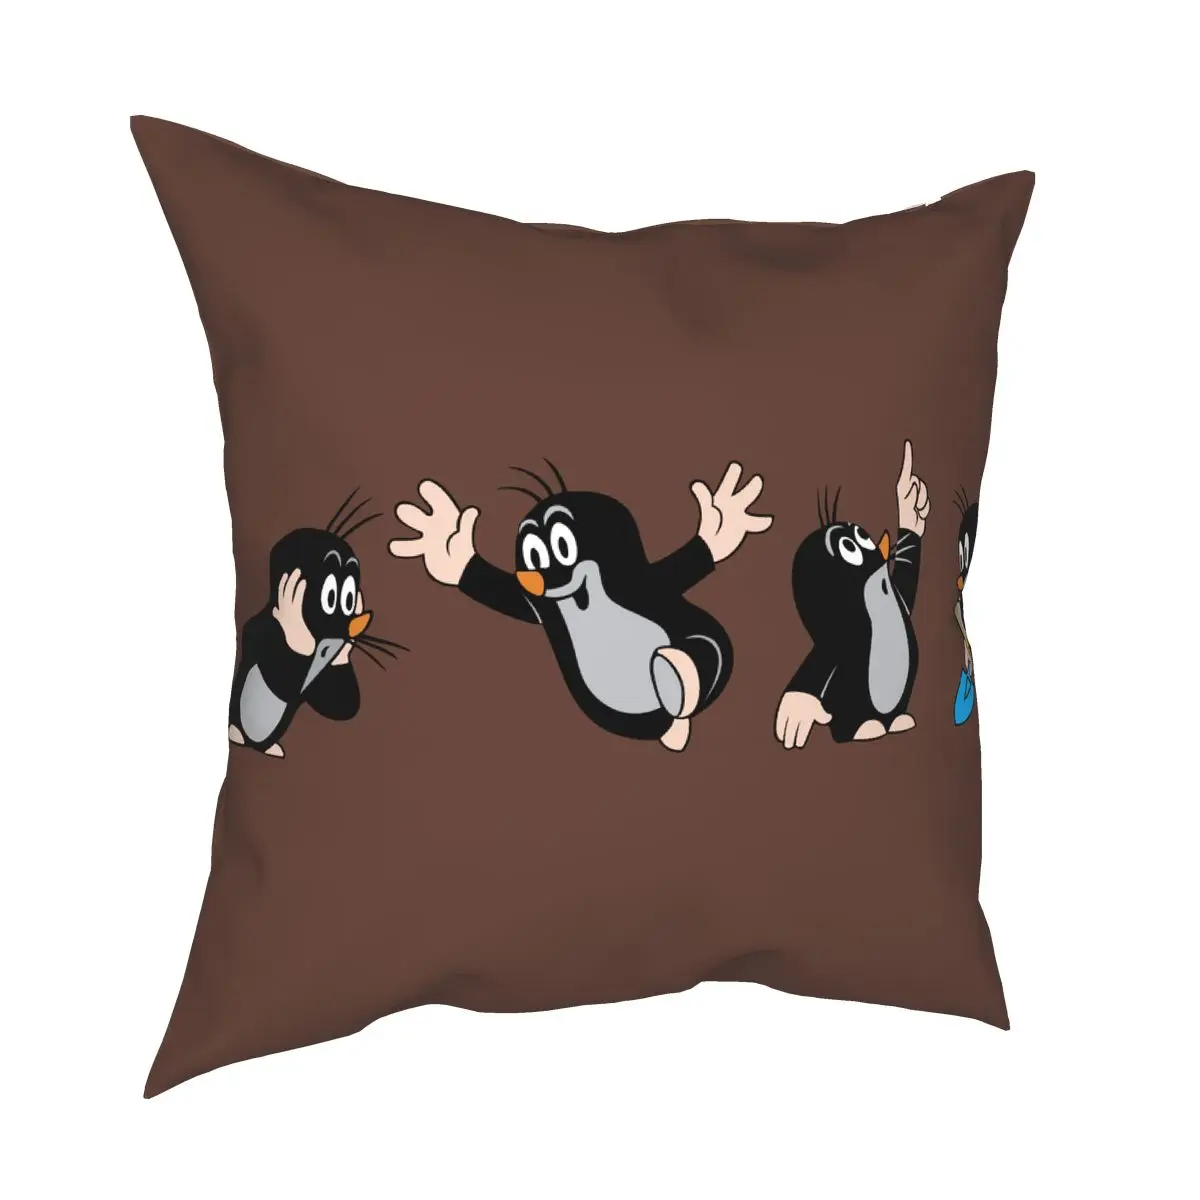 European Mole Comics Pillowcase Home Decorative Krtek Little Maulwurf Cushions Throw Pillow for Living Room Double-sided Print